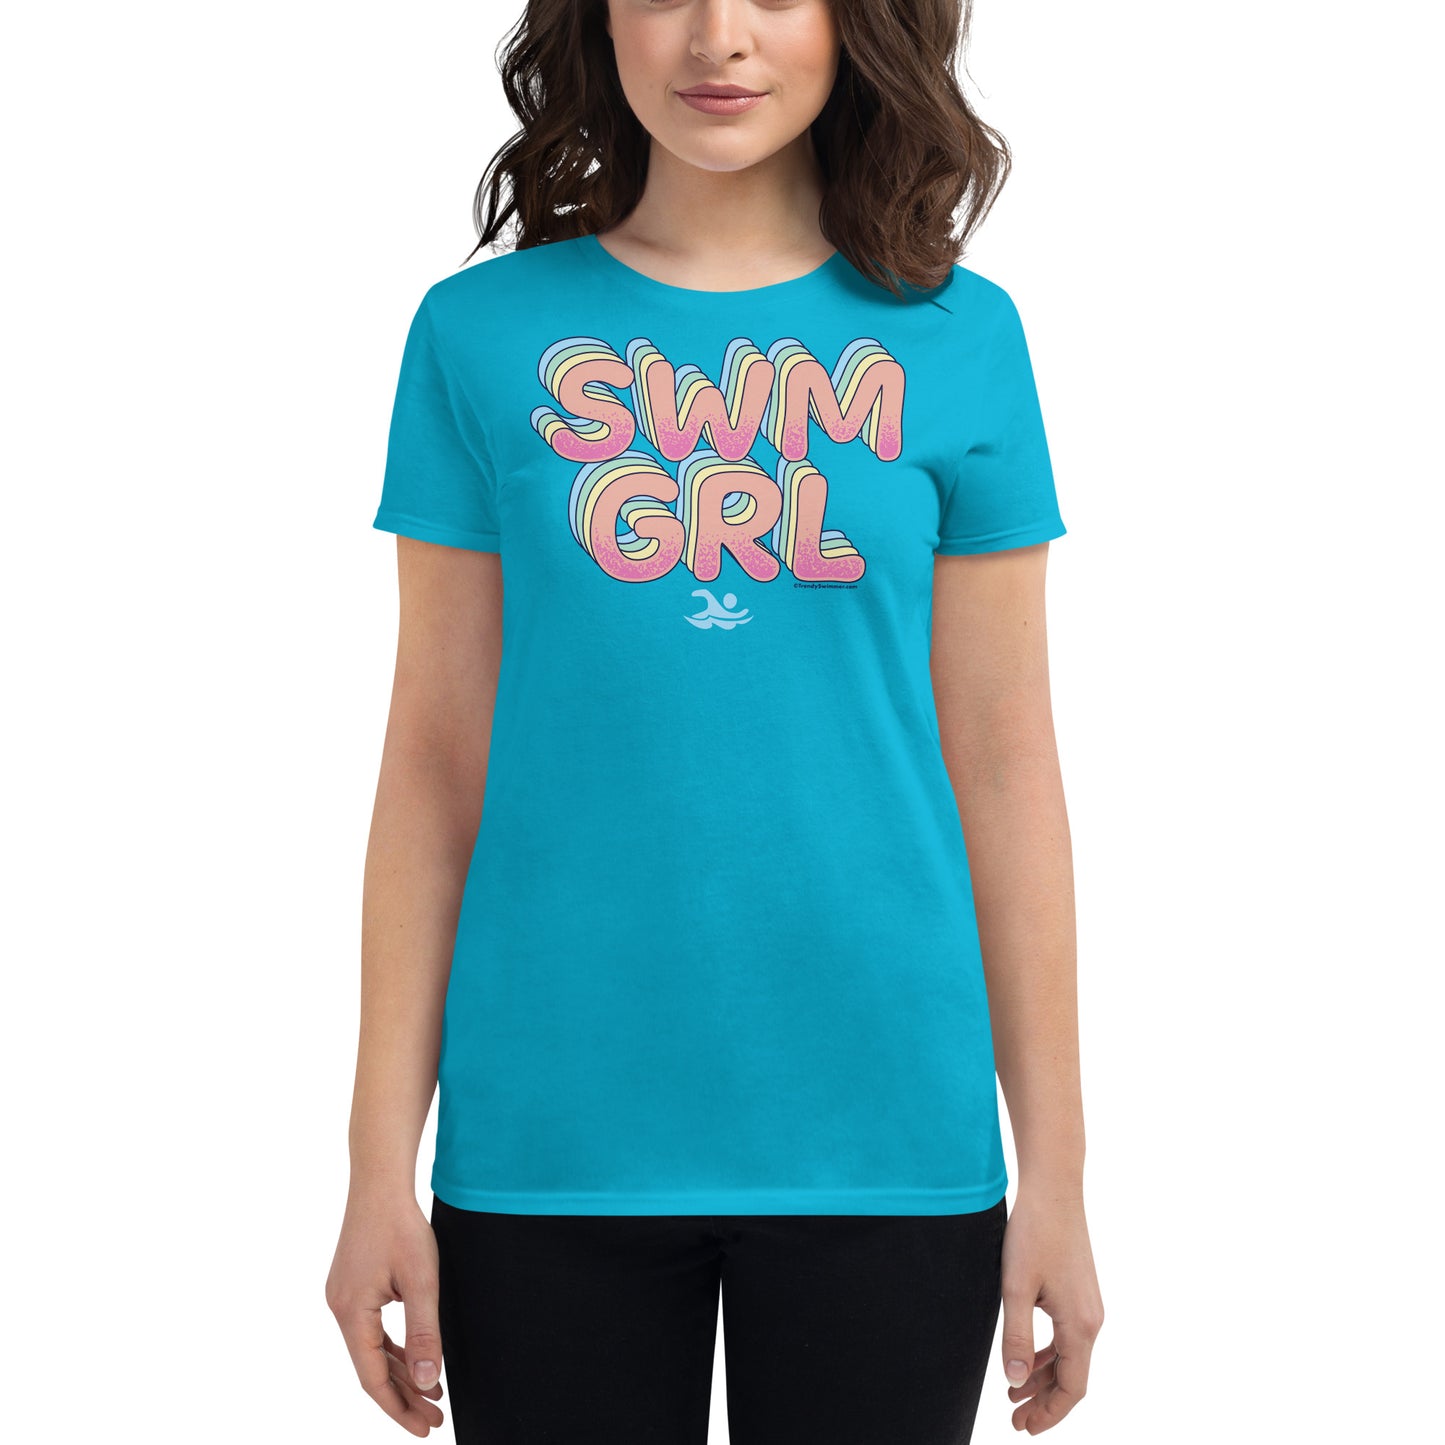 SWM GRL Swim Girl Women's Short Sleeve T Shirt